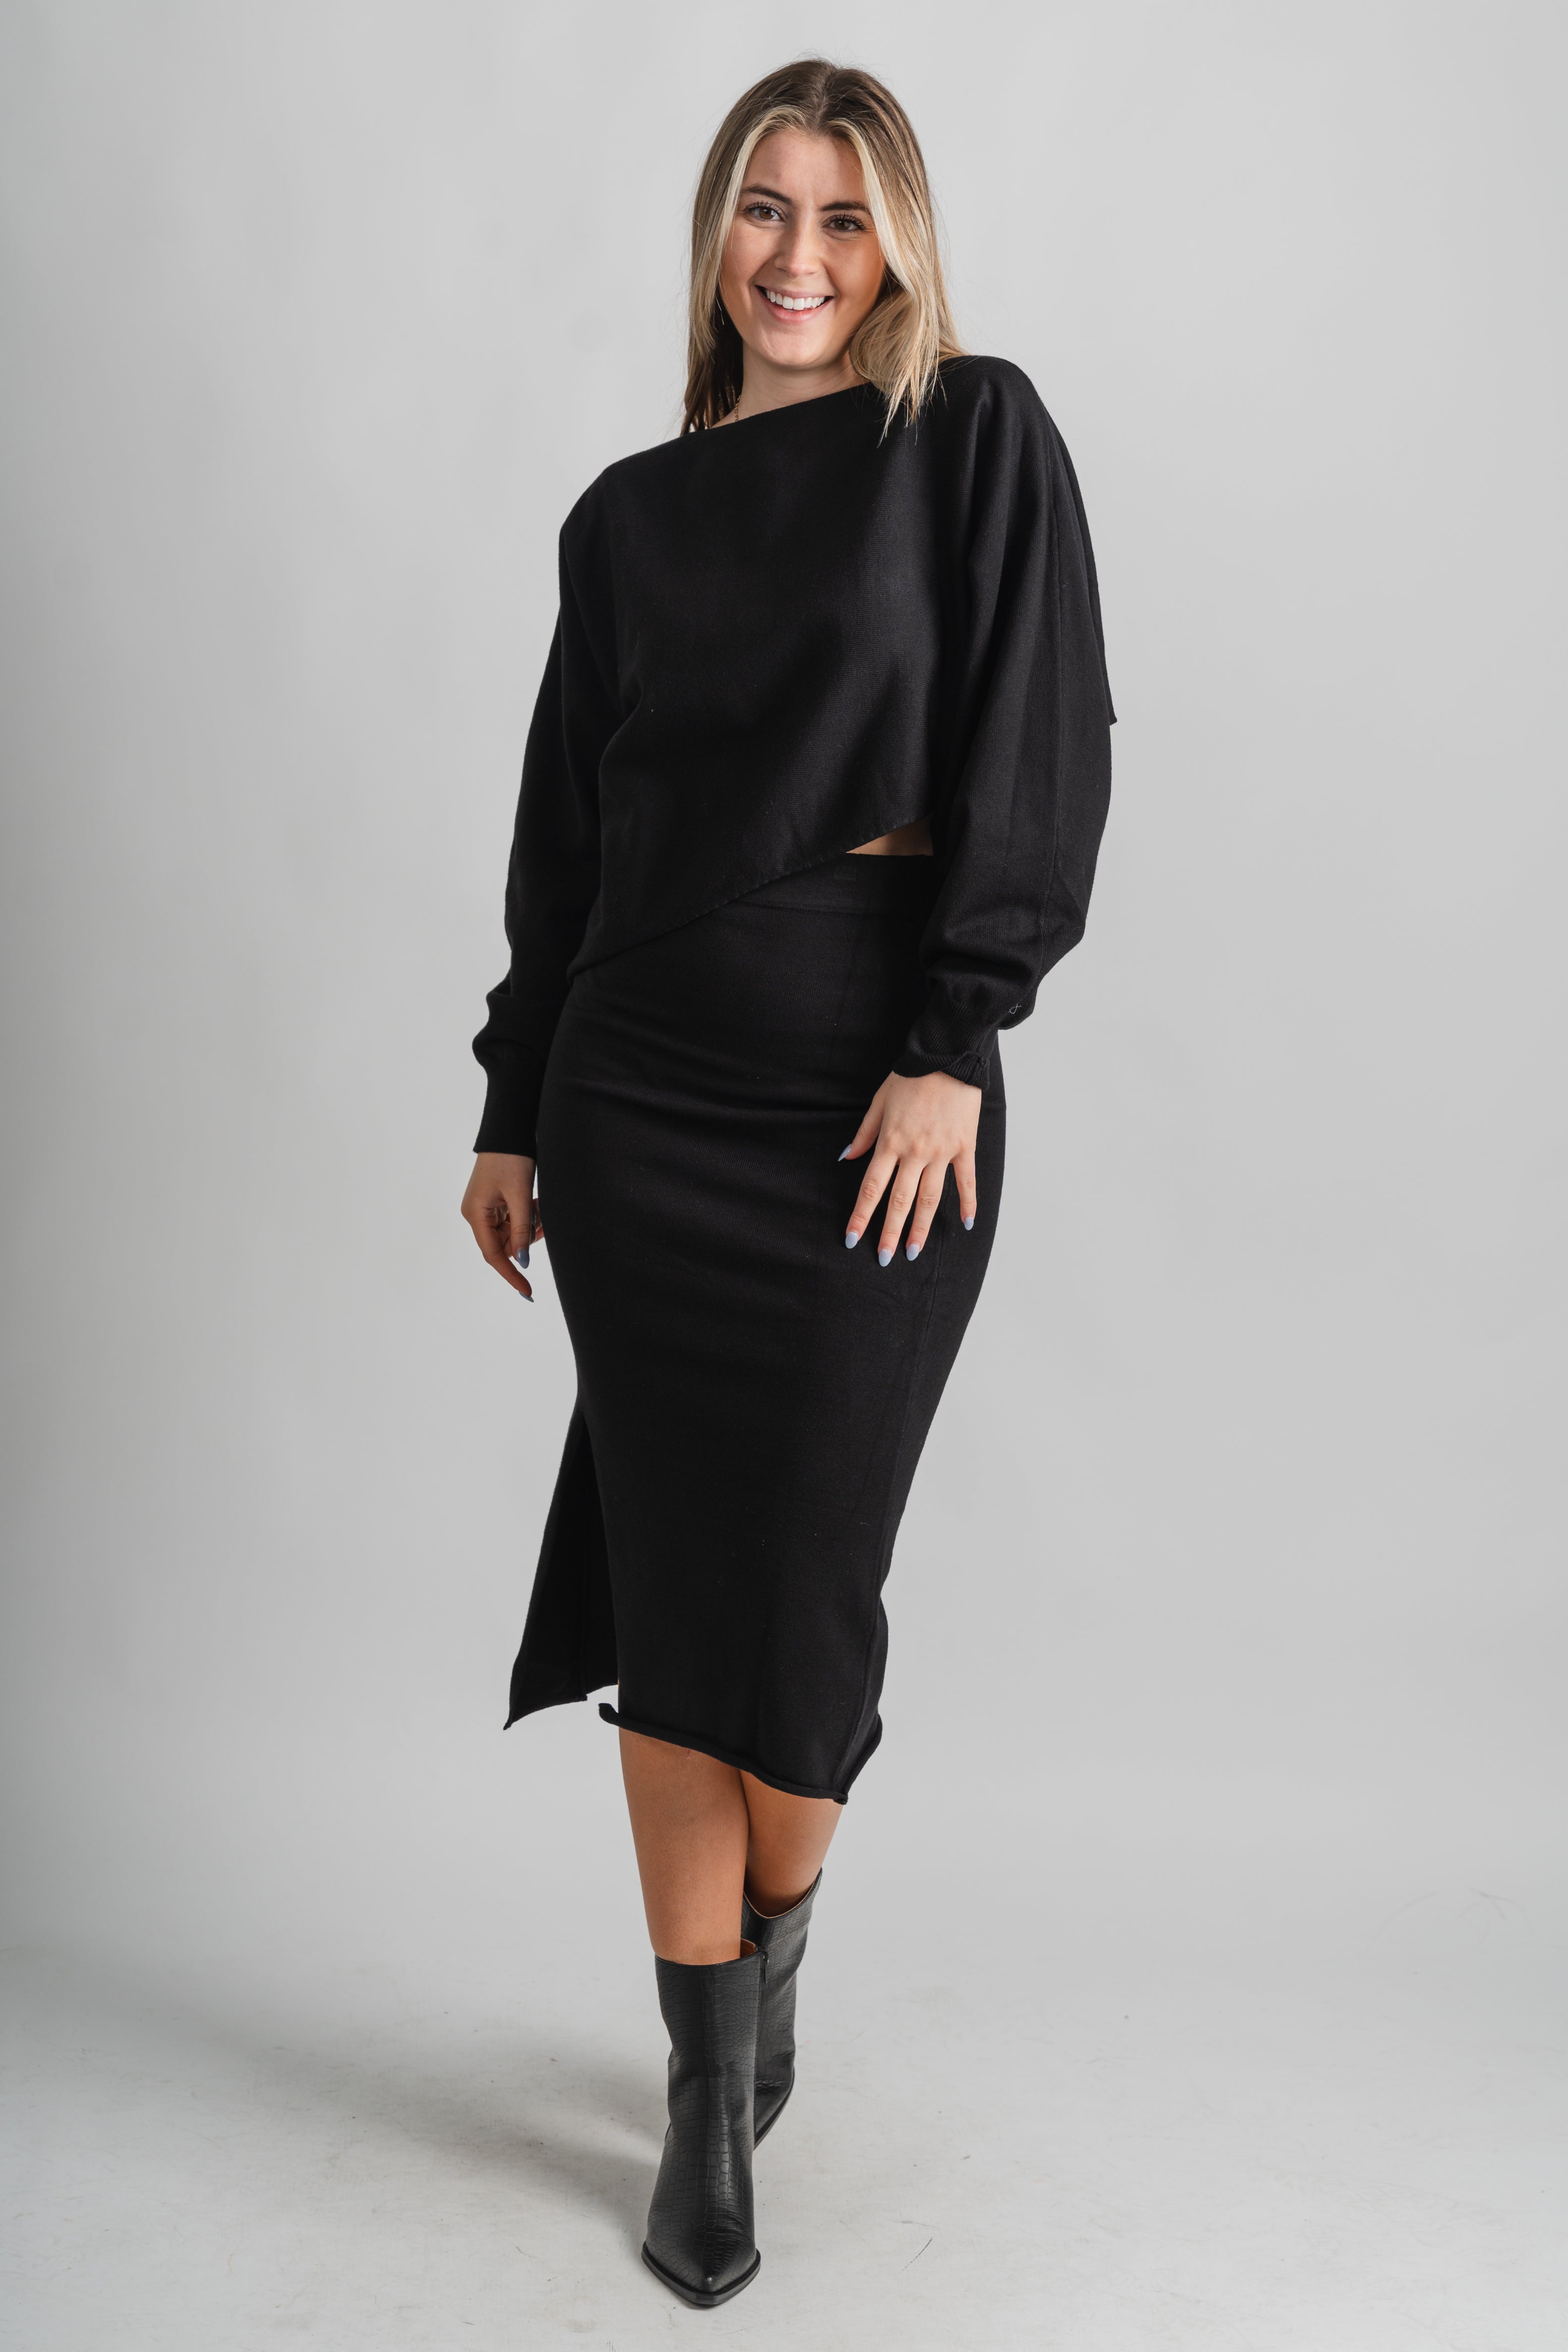 Sweater midi skirt black | Lush Fashion Lounge: boutique fashion skirts, affordable boutique skirts, cute affordable skirts